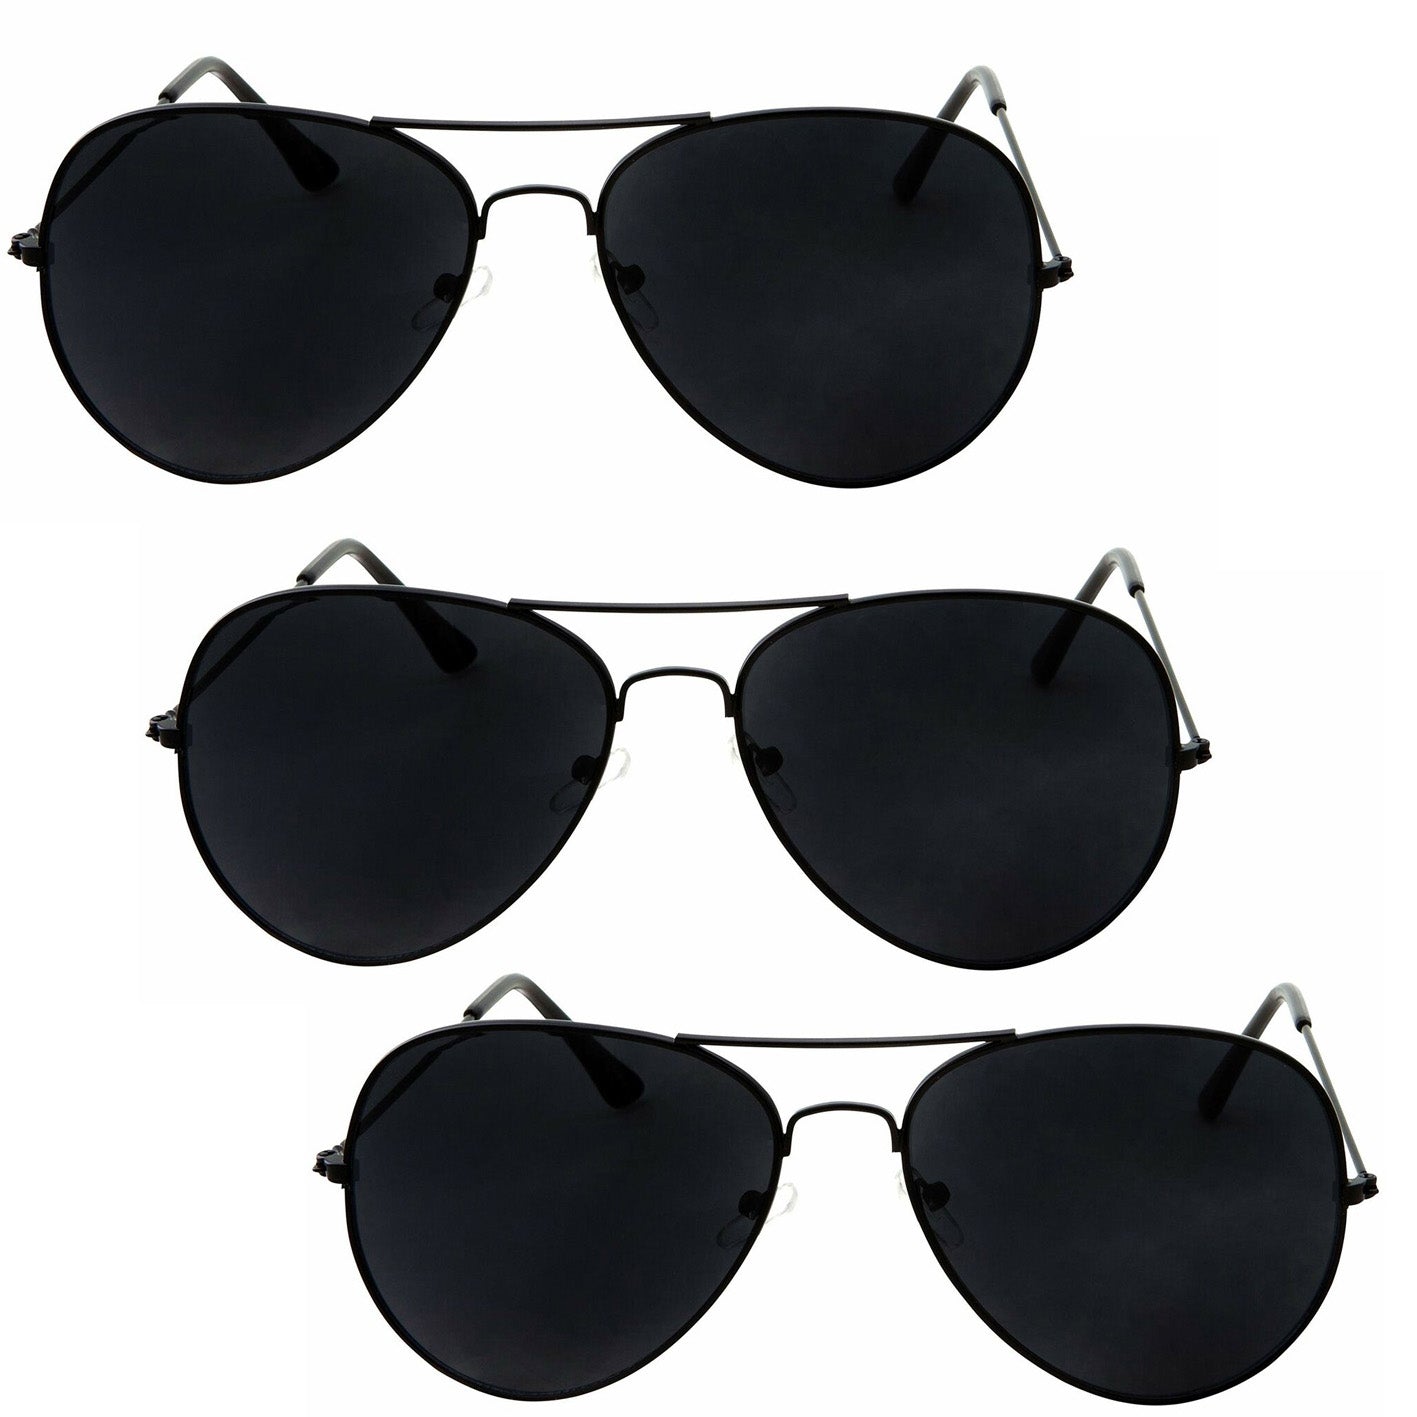 Oversized - 60mm Super Dark Lens Limo Tint Pilot Sunglasses - Men and Women Privacy Sunglasses